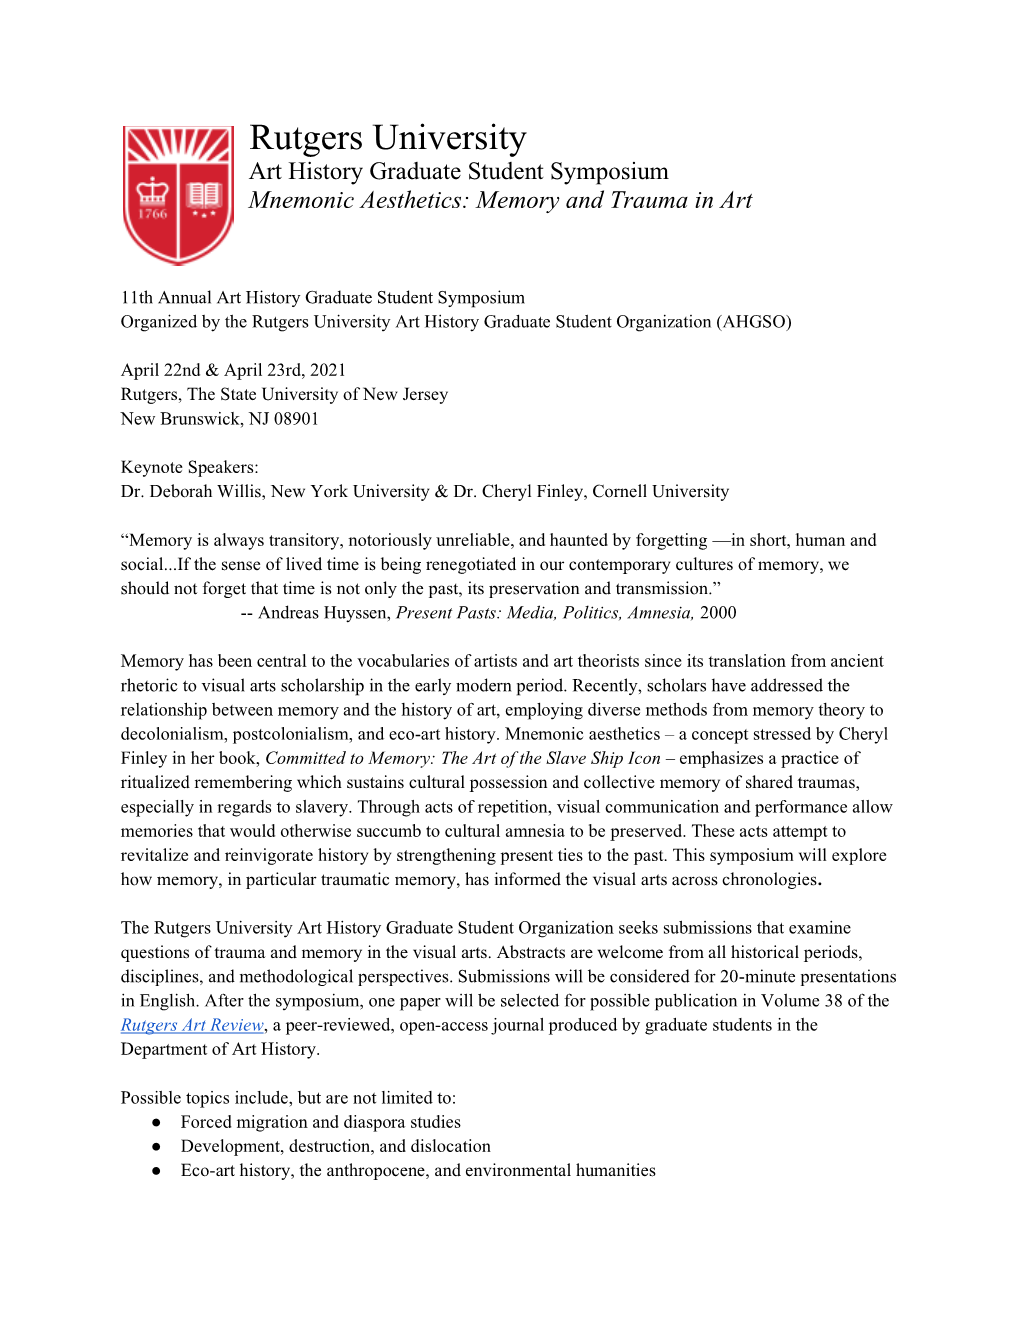 Rutgers University Art History Graduate Student Symposium Mnemonic Aesthetics: Memory and Trauma in Art